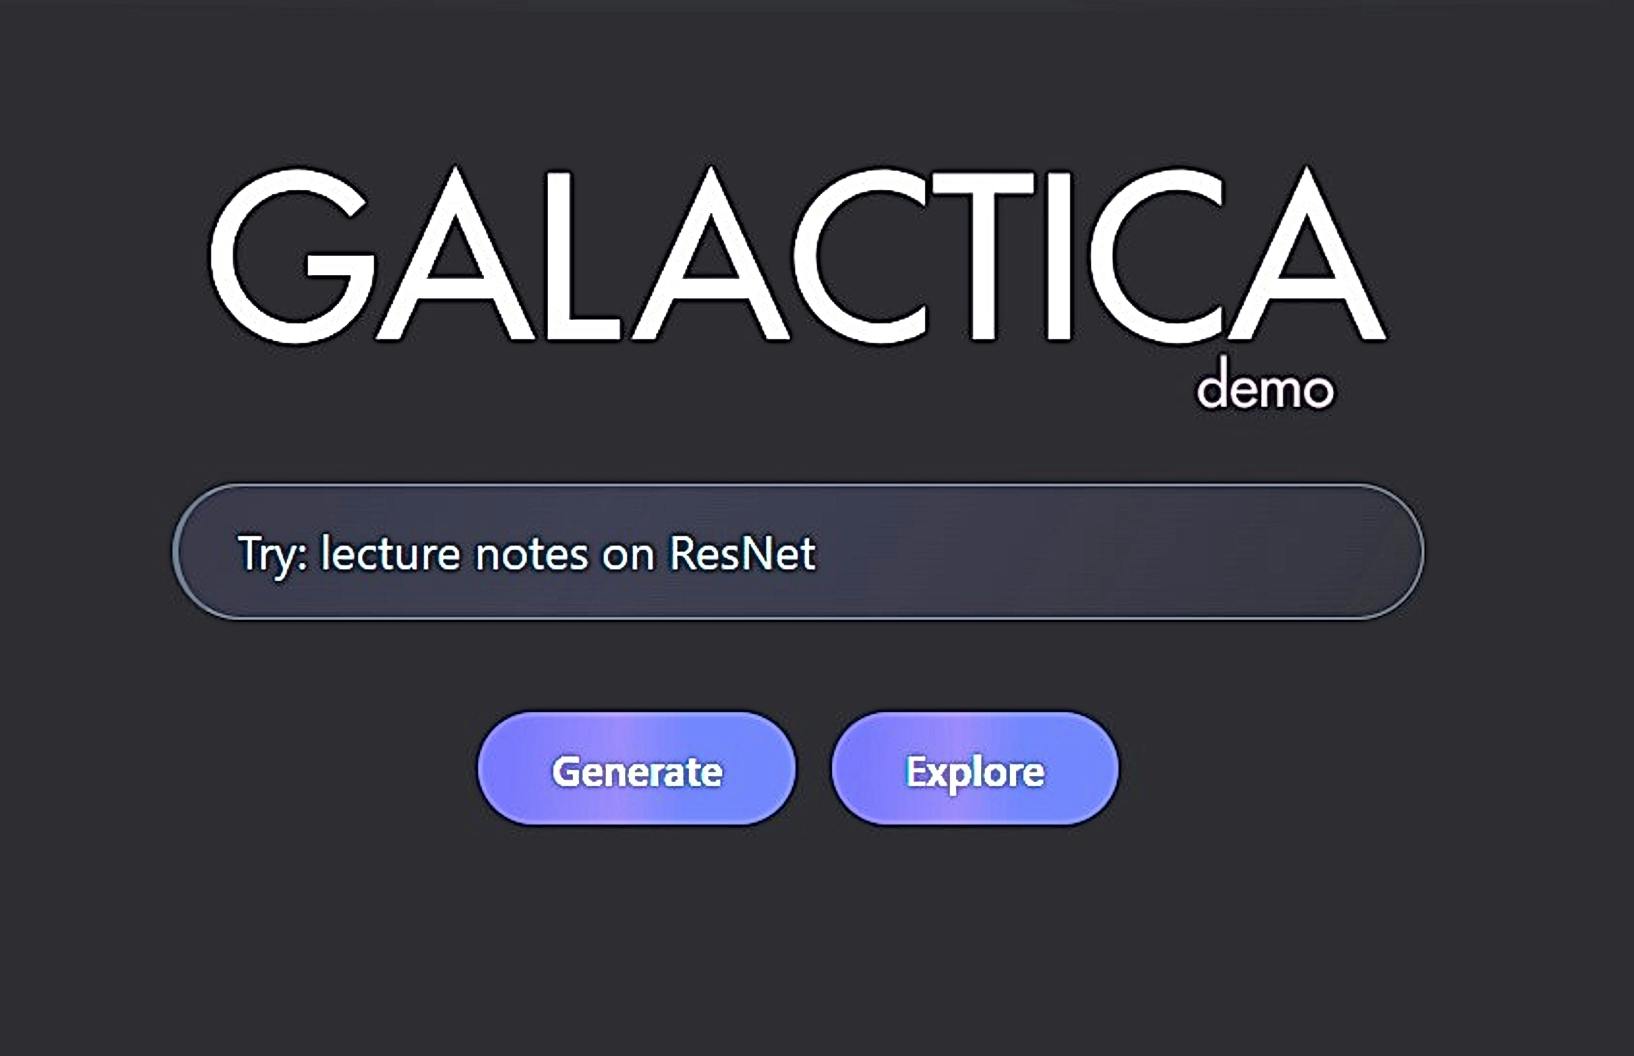 Galactica featured